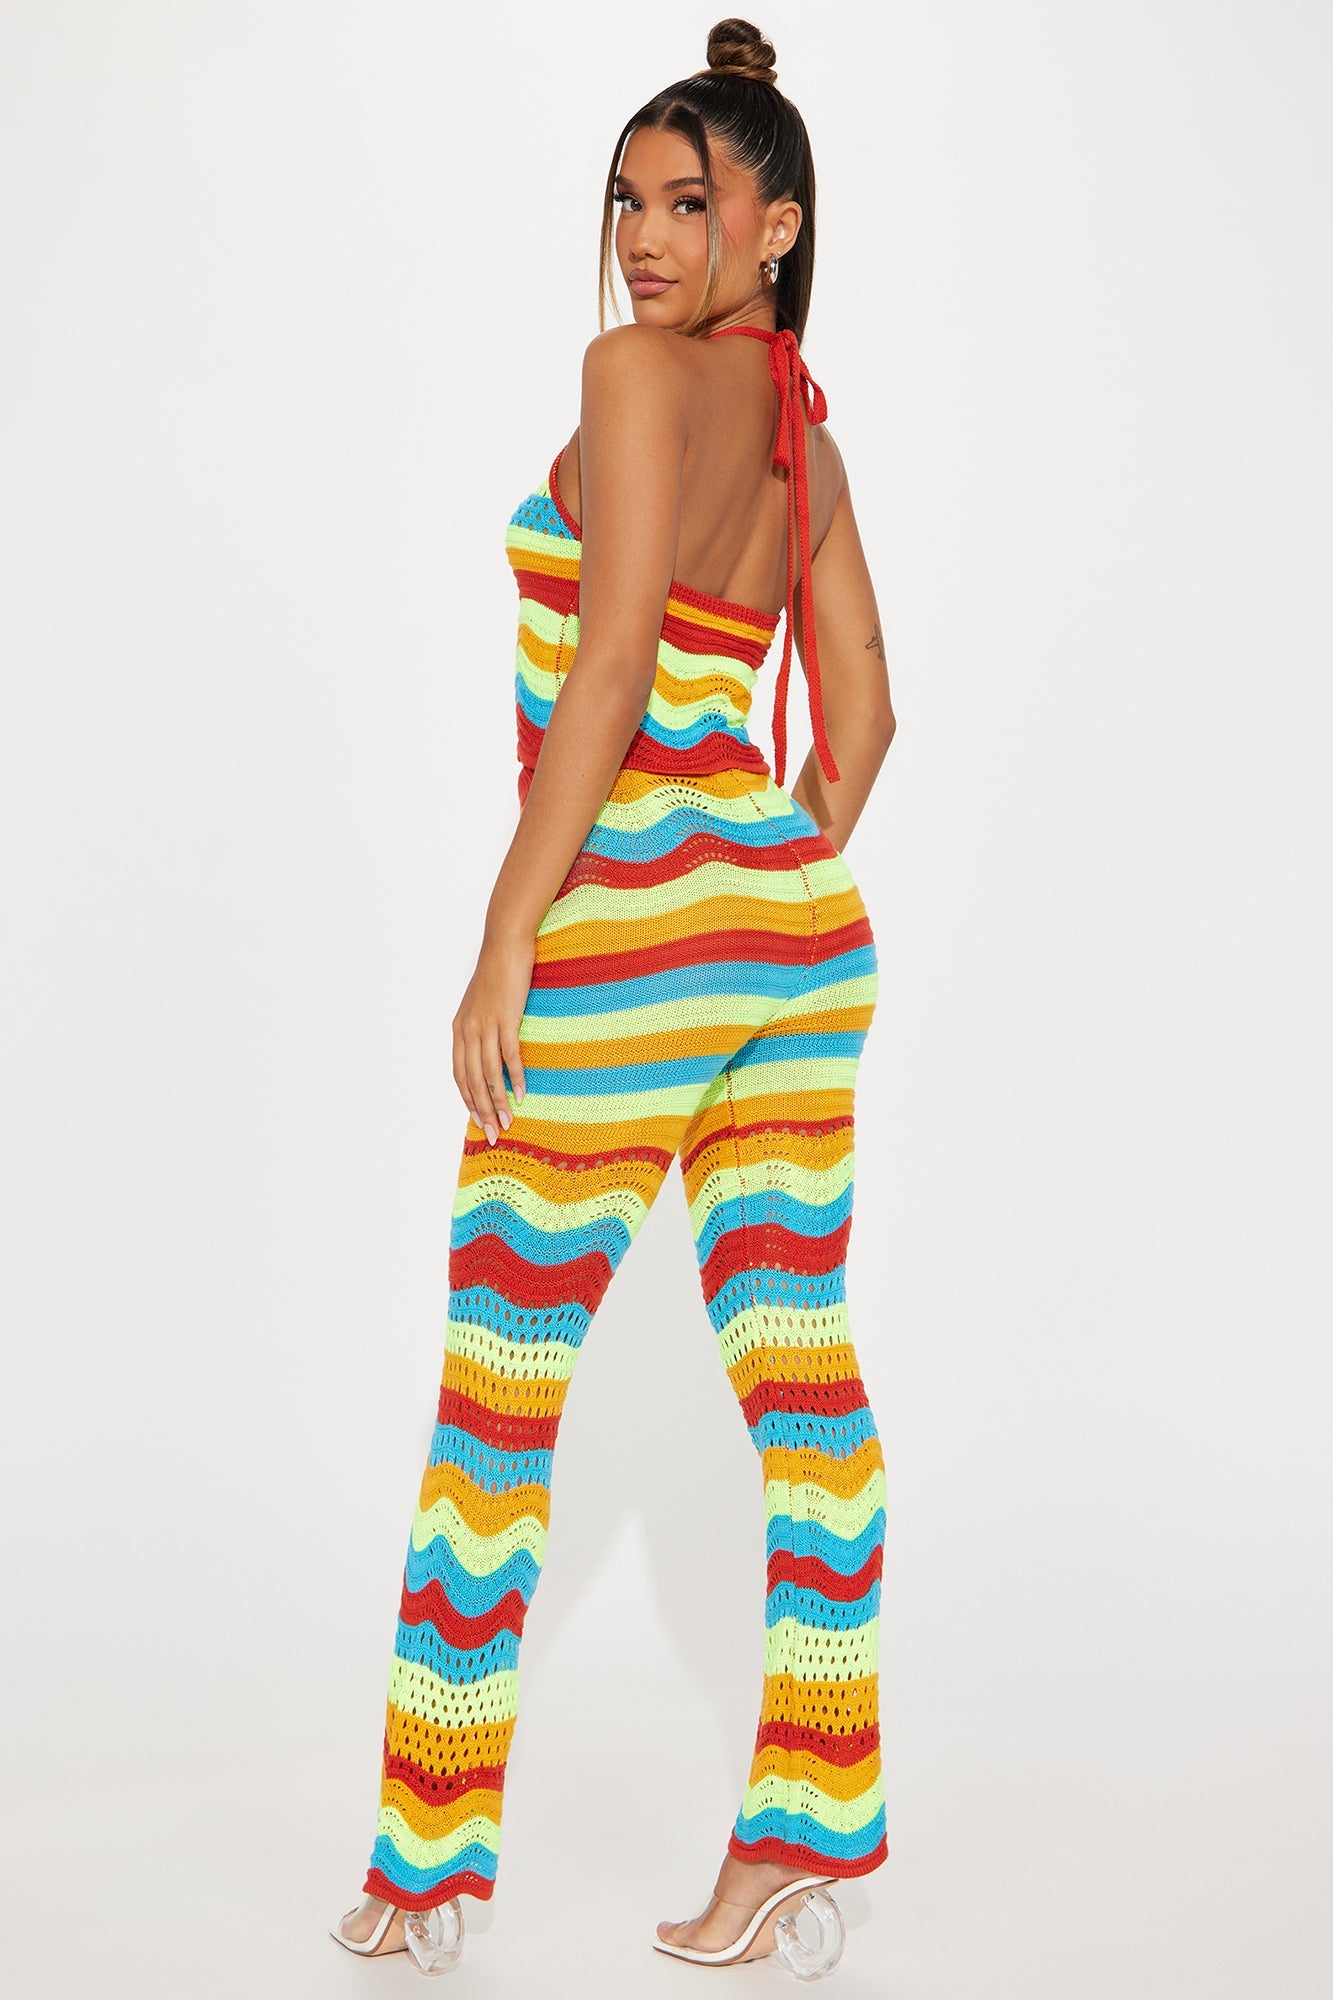 Sunnyside Colorful Crochet Pant Combo Set